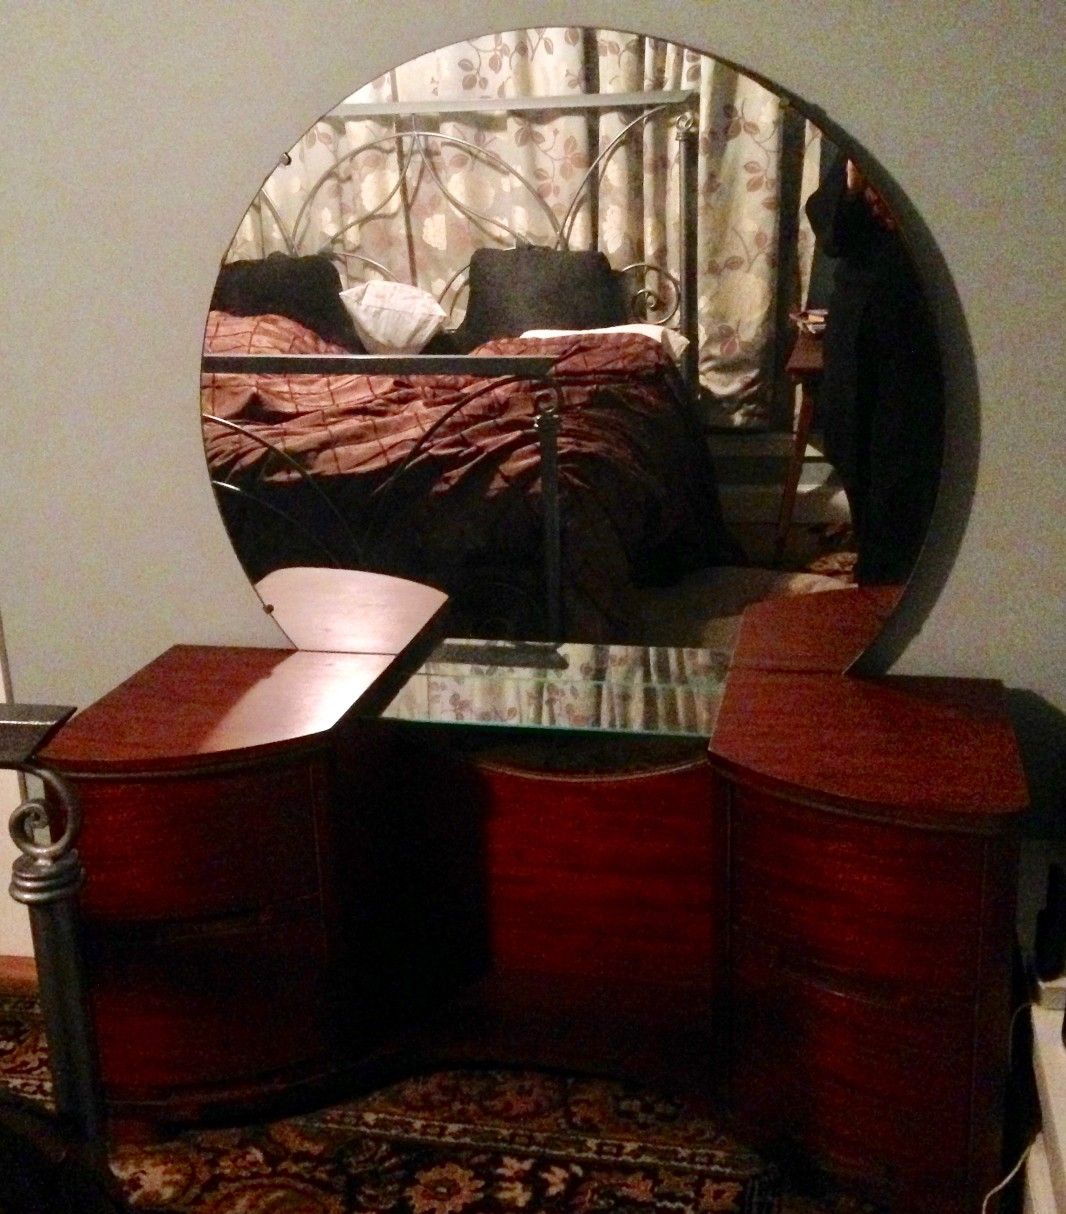 Antique art deco or nouveau vanity and stool